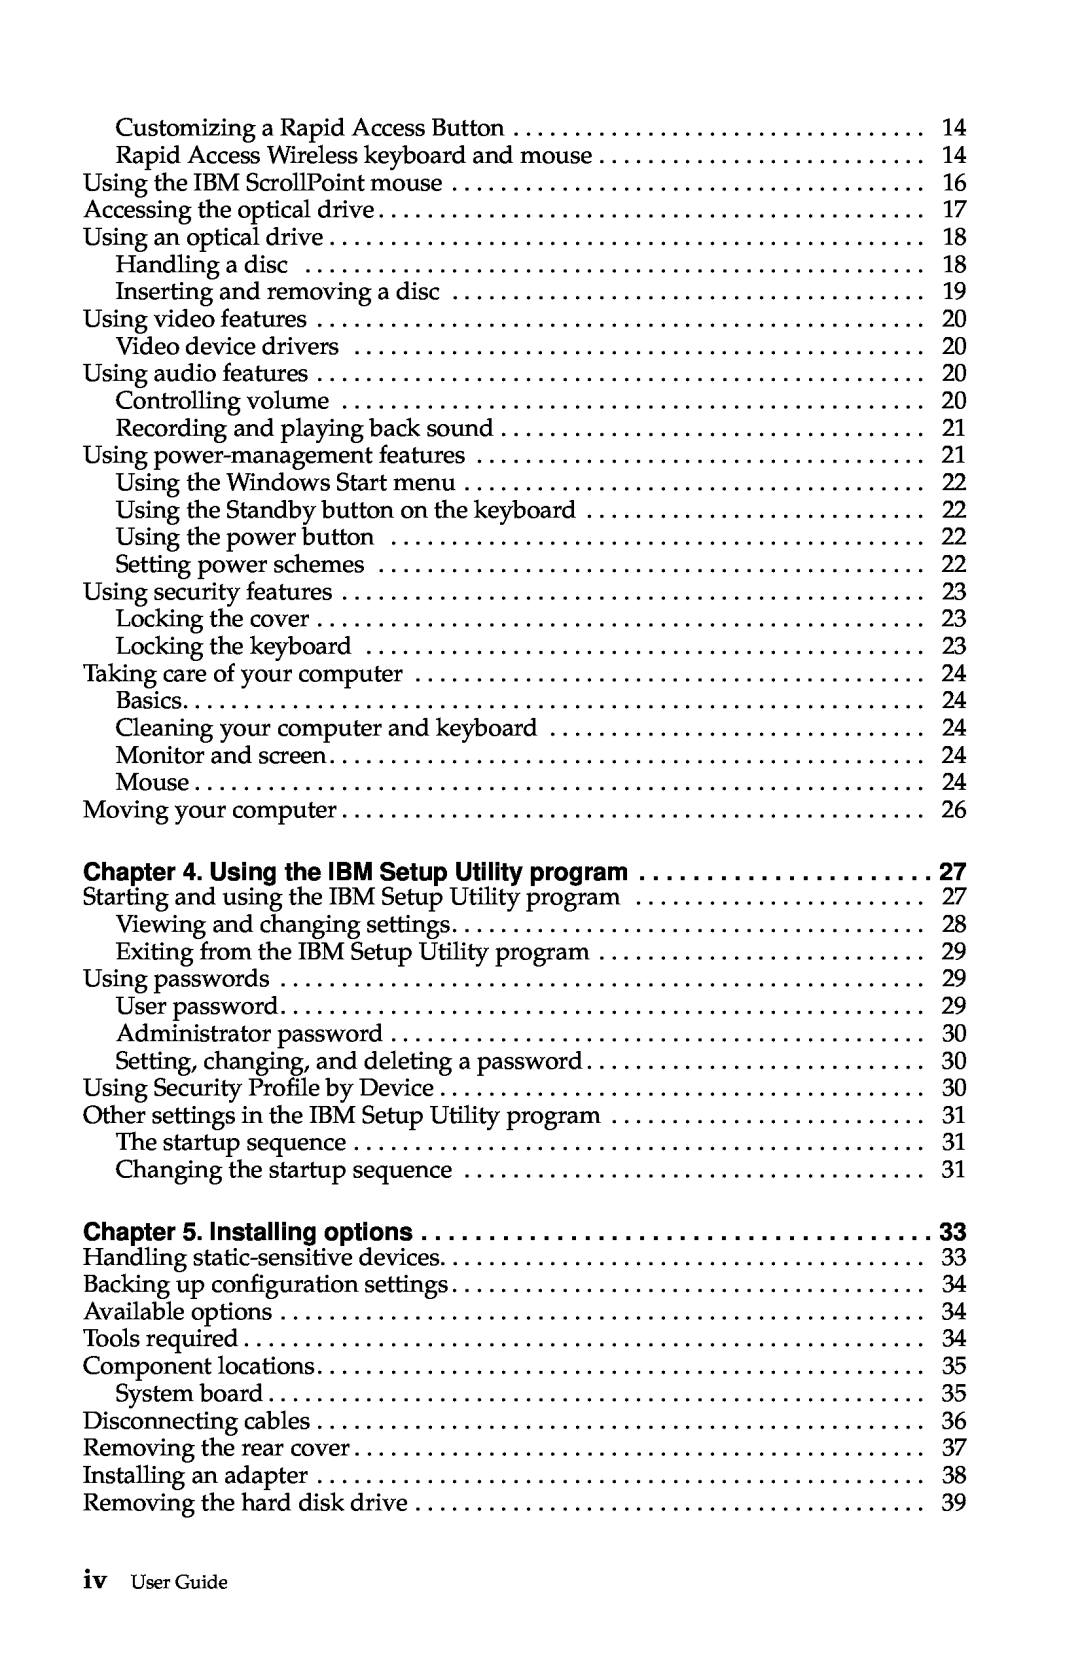 IBM 6274, 2283 manual iv User Guide 